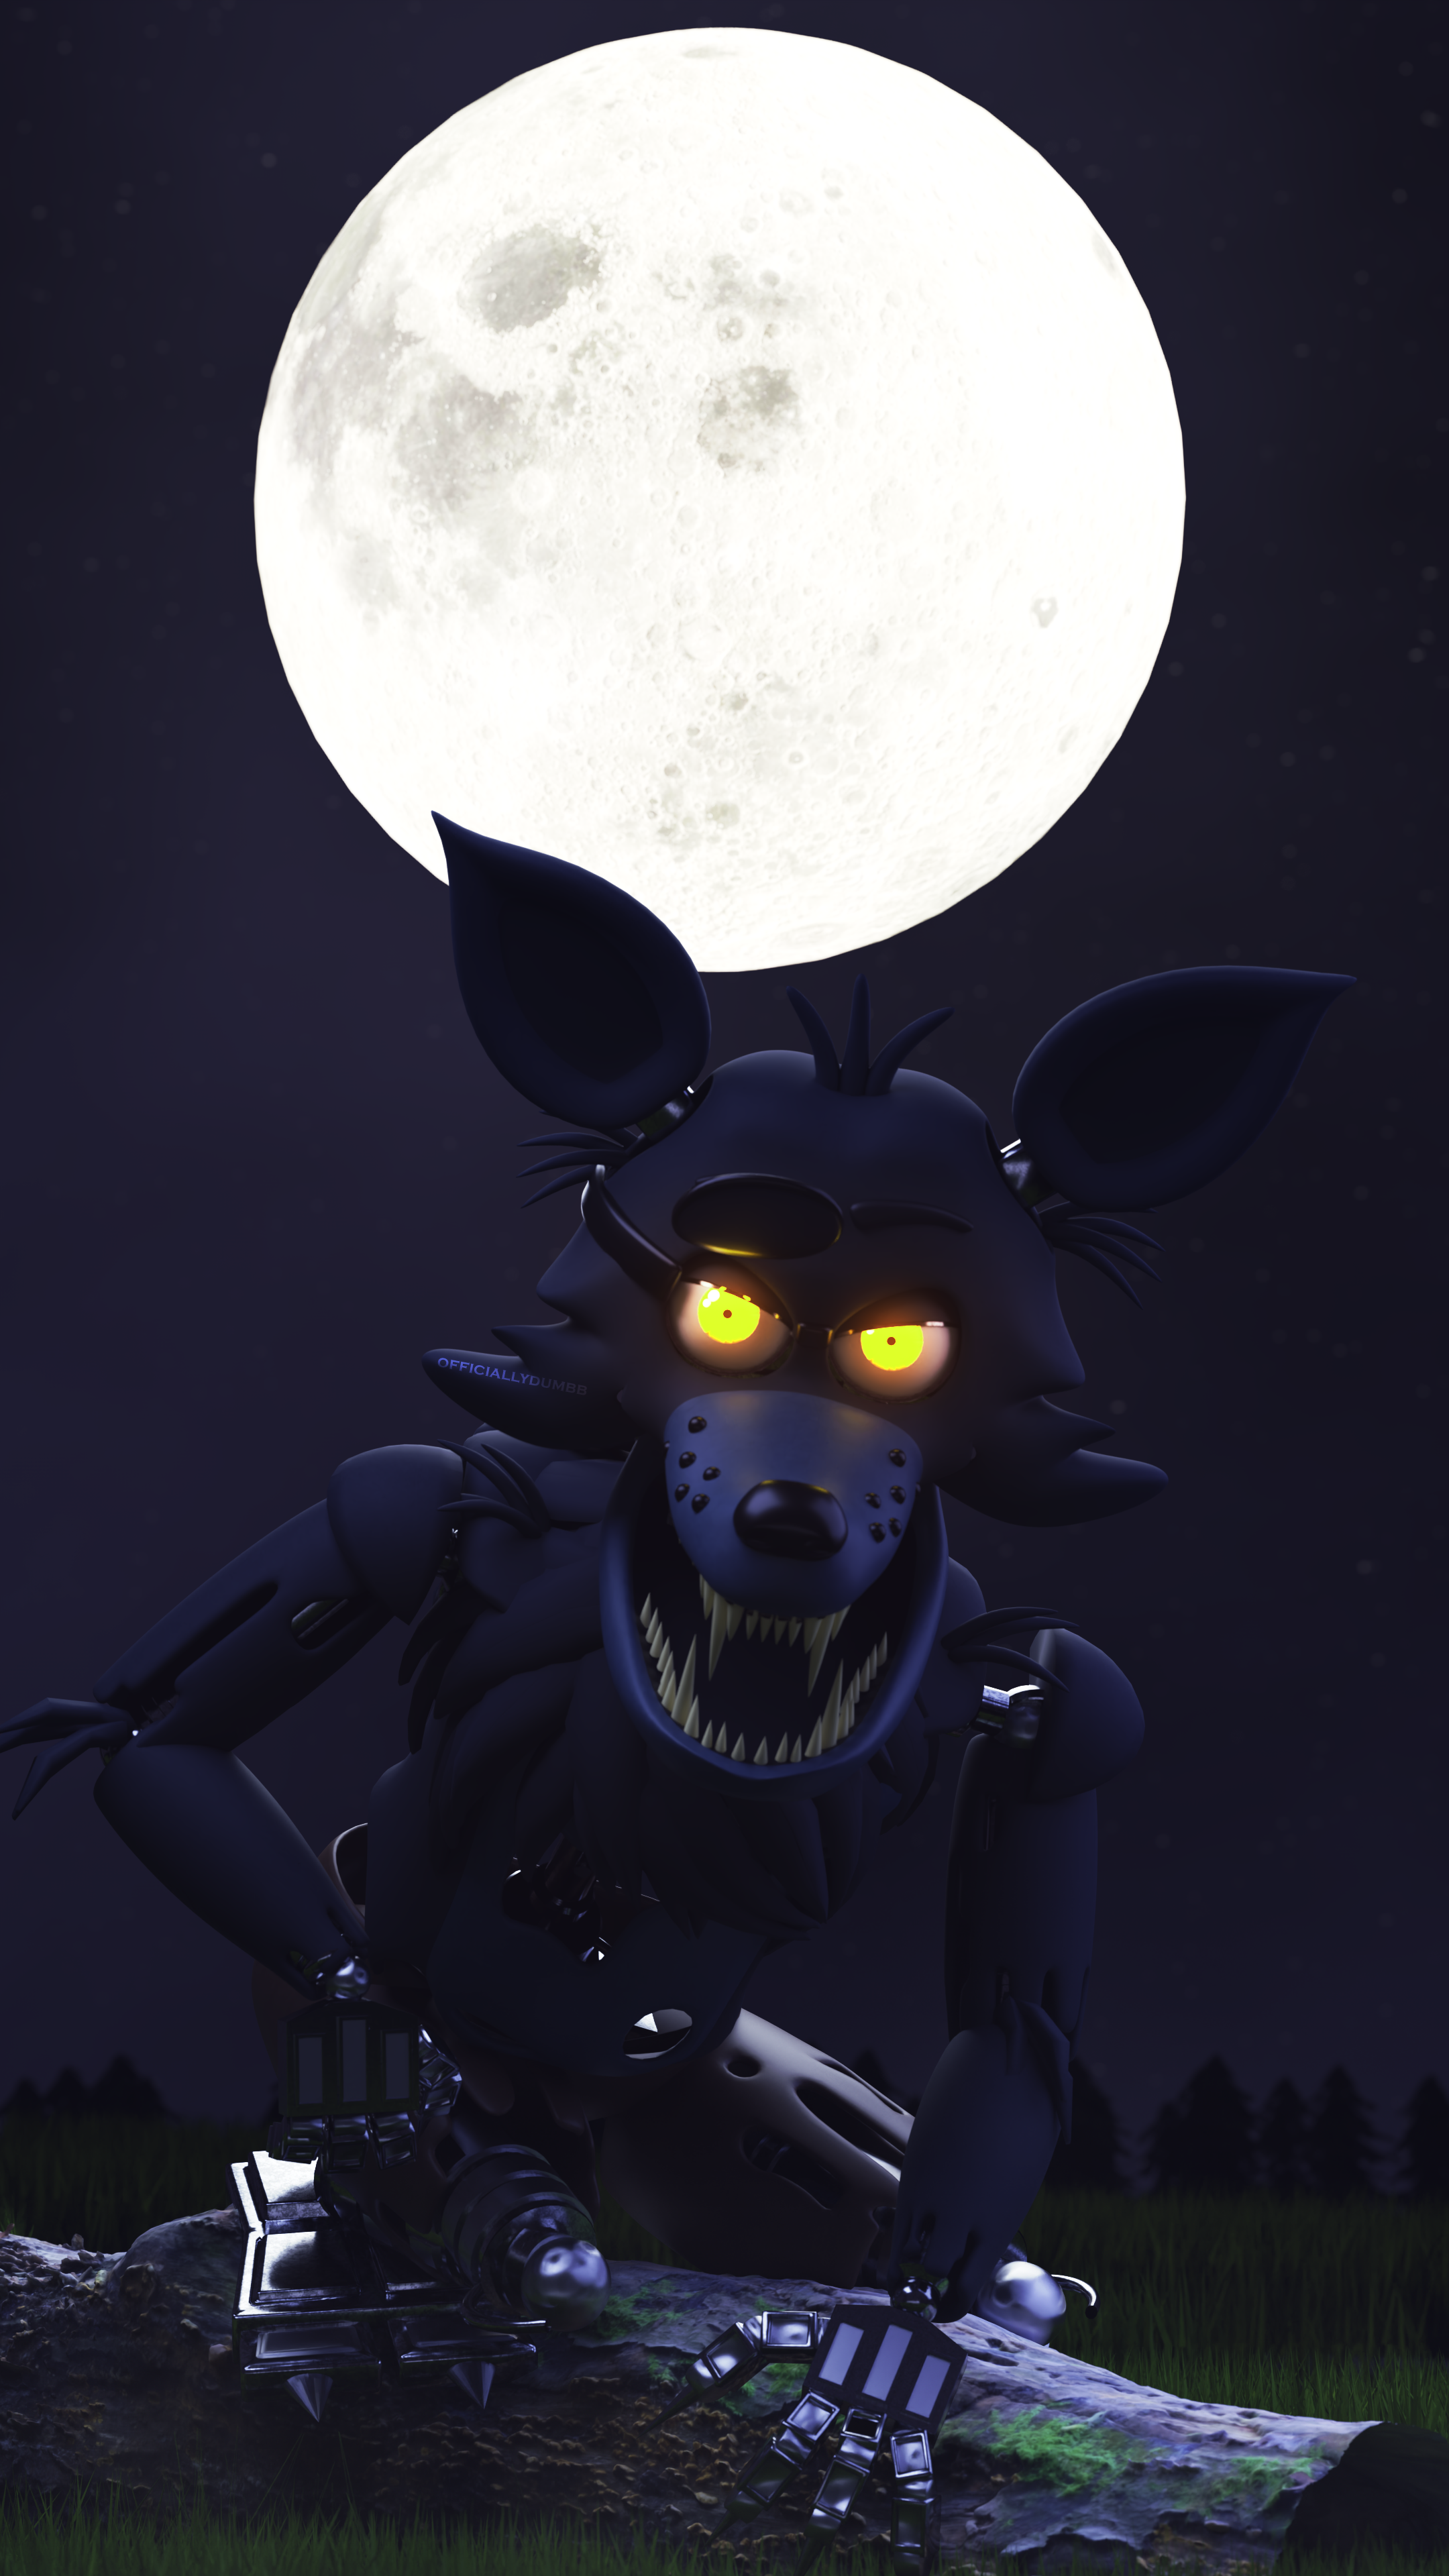 Nightmare Foxy Fnaf by IsaSaldareli on DeviantArt